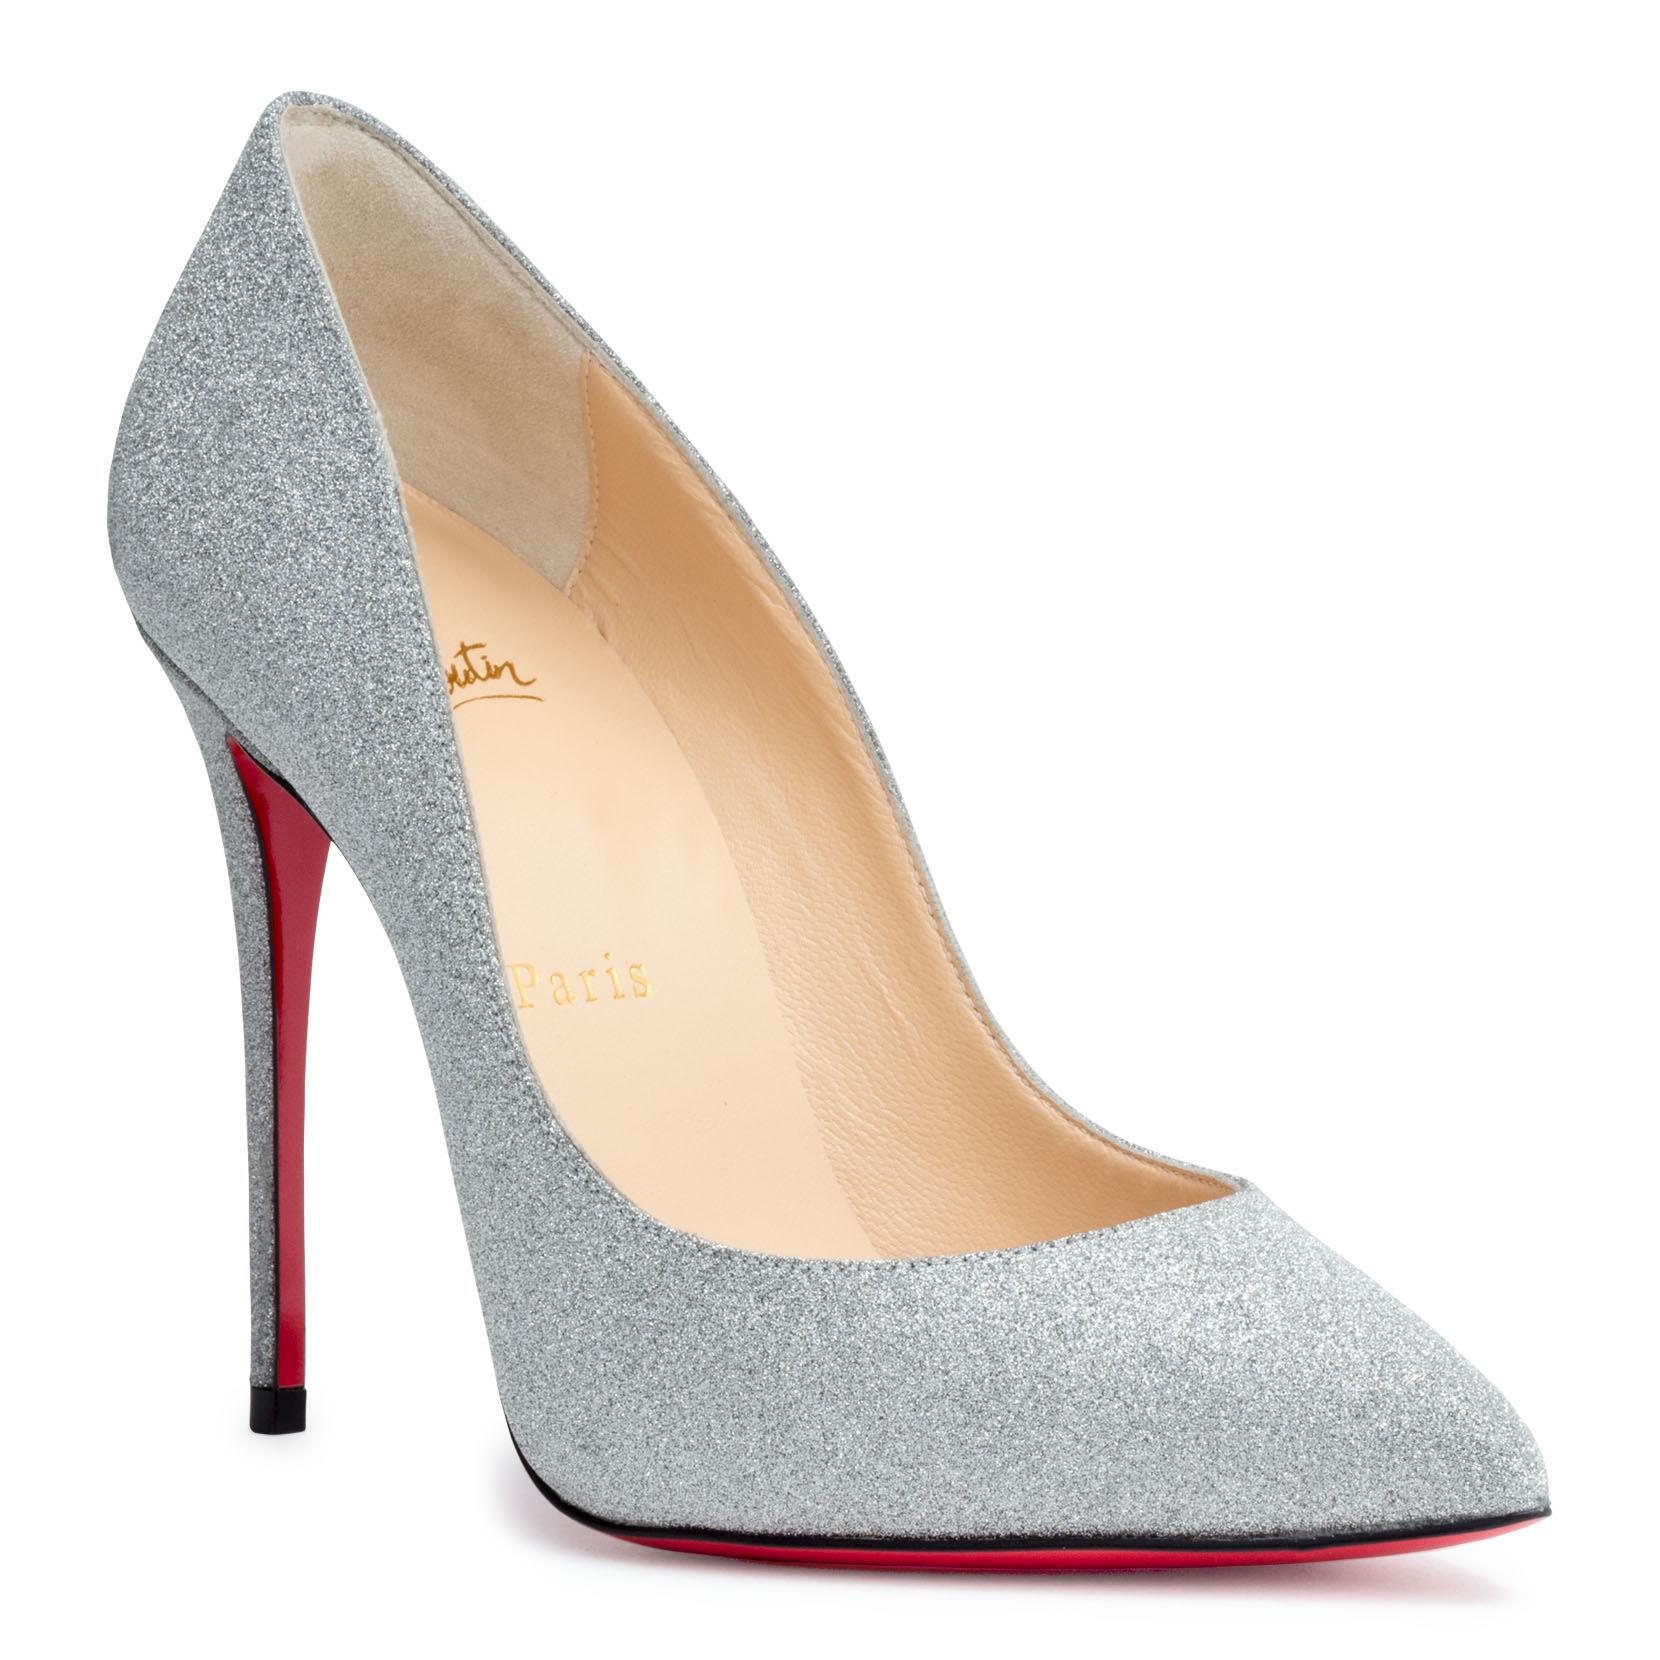 Christian Louboutin, Shoes, Silver Glitter So Kate Christian Louboutin  Heels